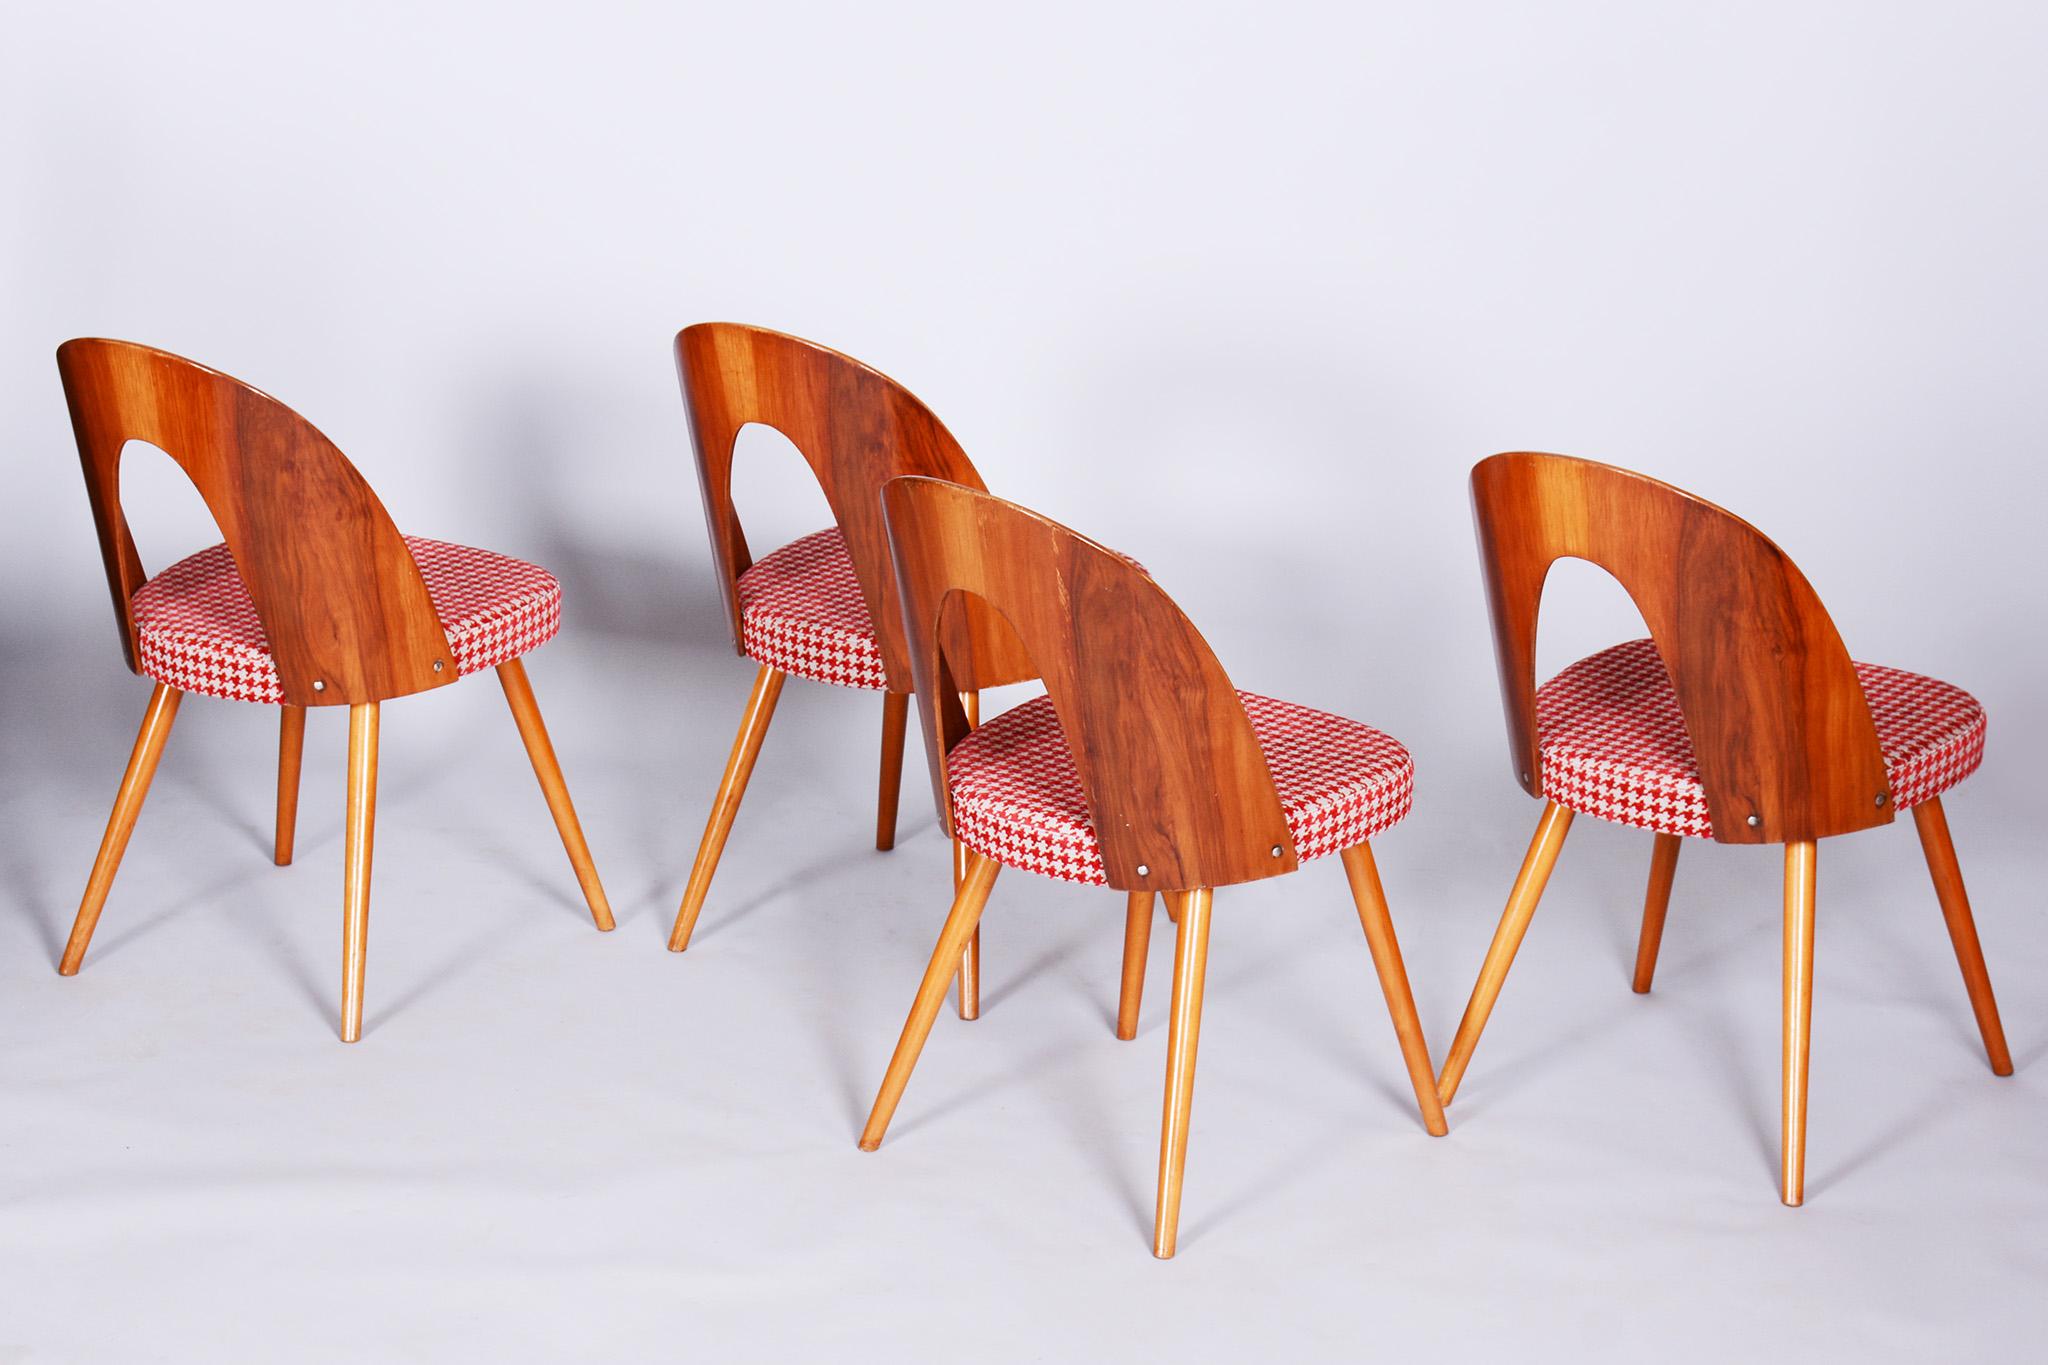 Four Restored Midcentury Chairs, Antonin Suman, Beech, Walnut, Czechia, 1950s For Sale 2